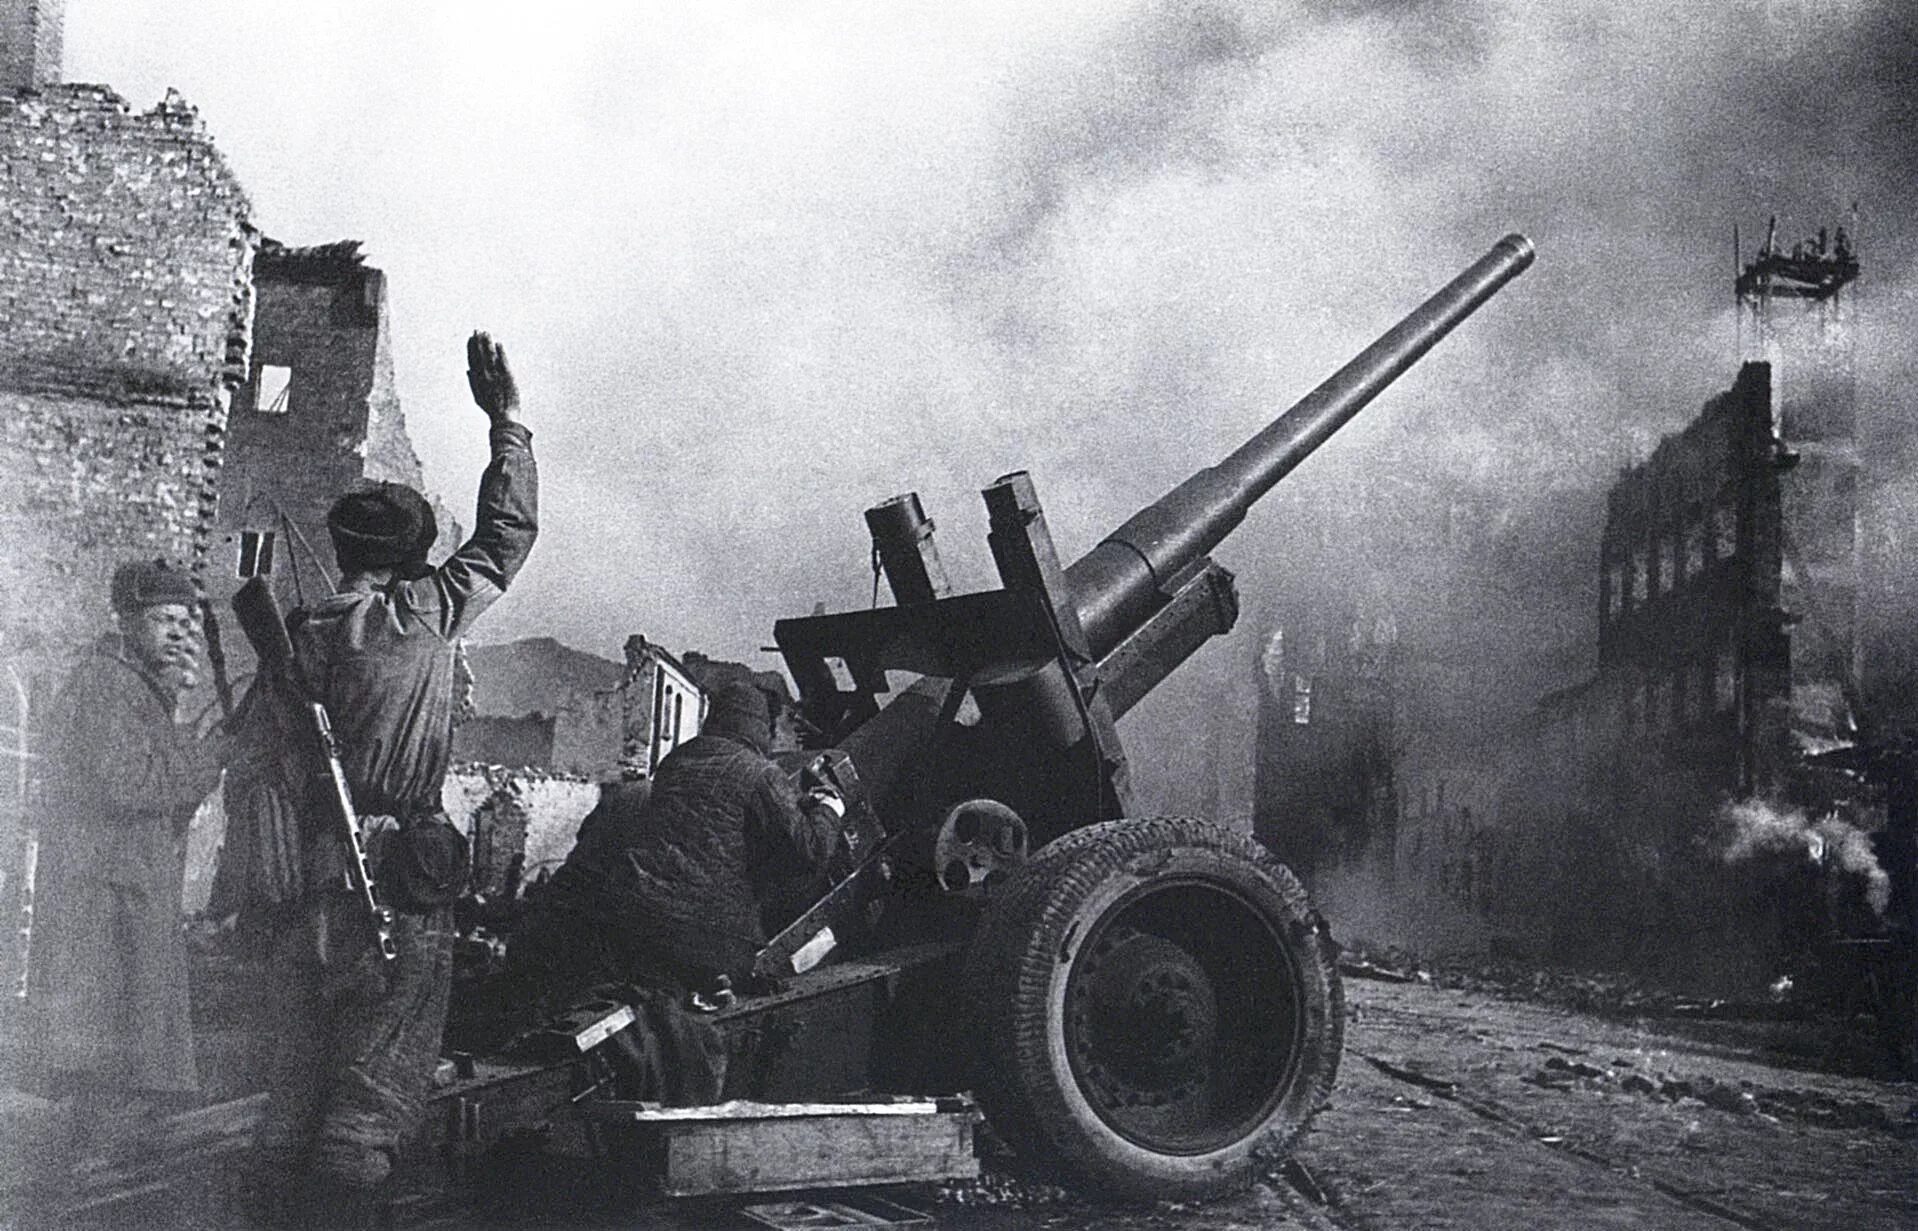 Картинки про отечественную войну. А19 пушка 1941.